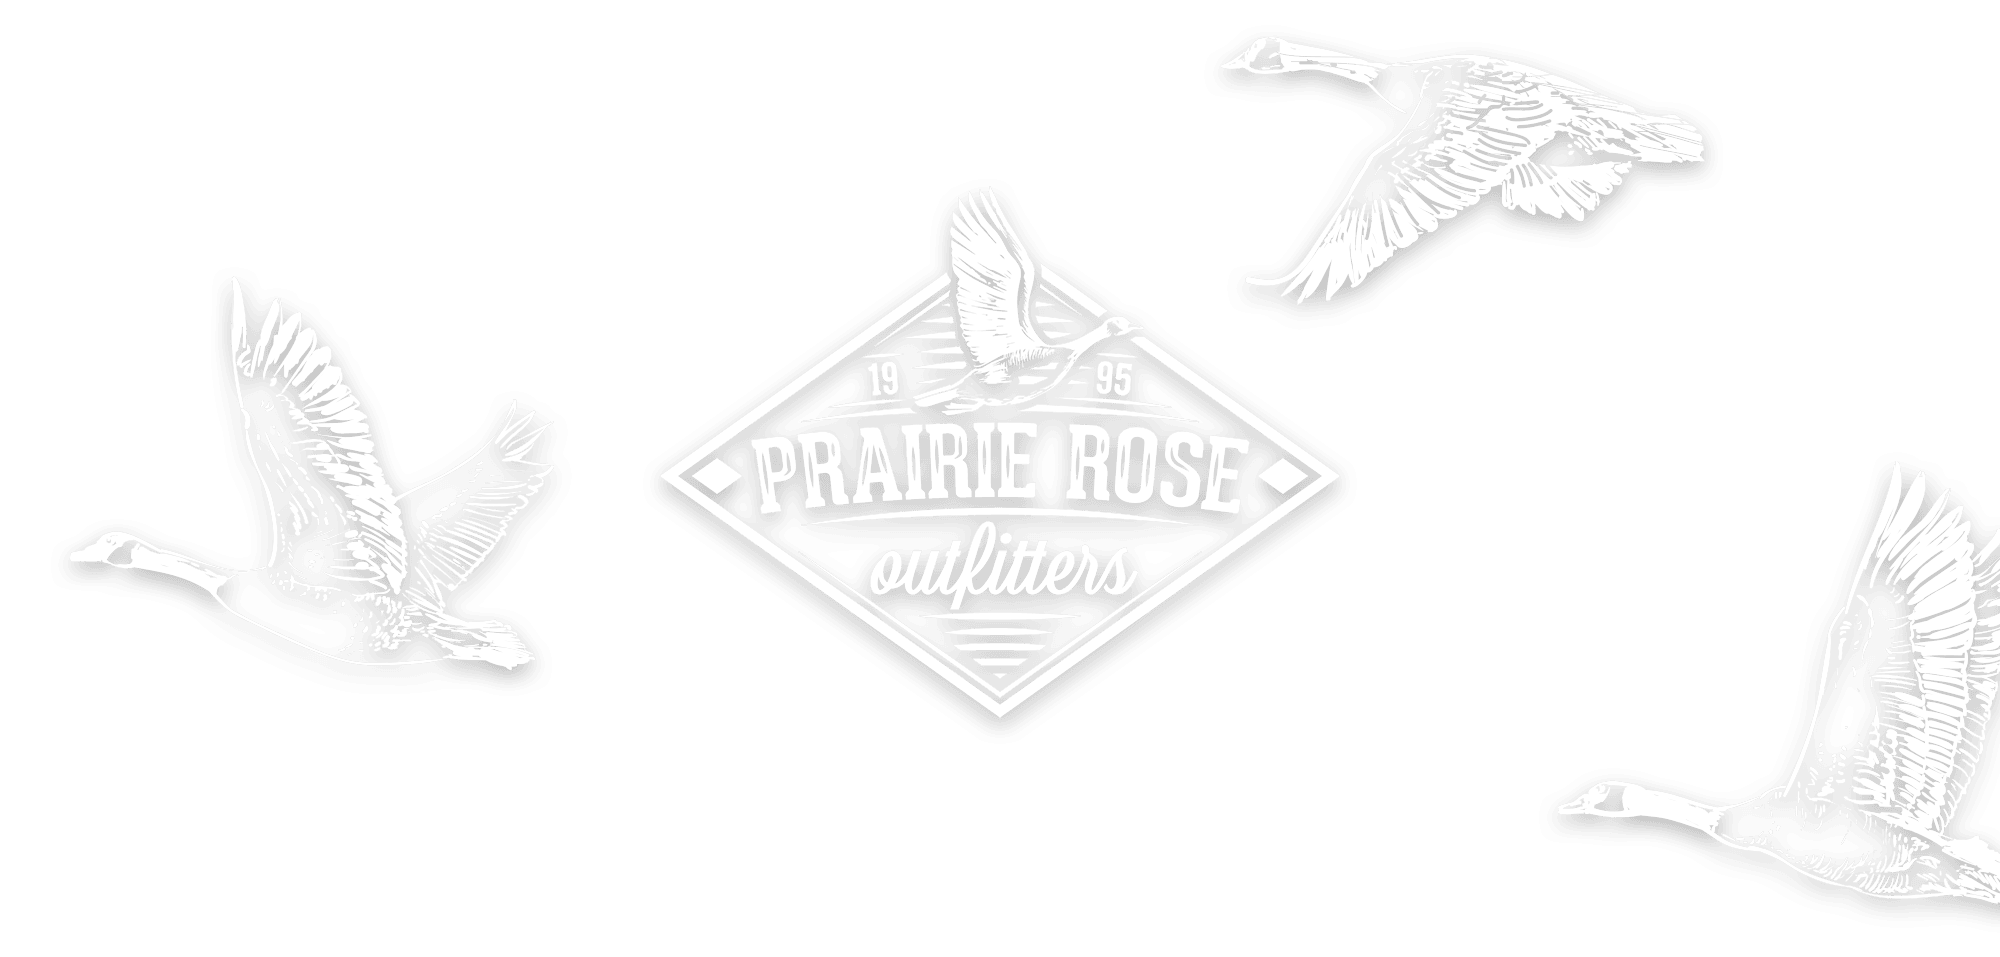 Prairie Rose logo